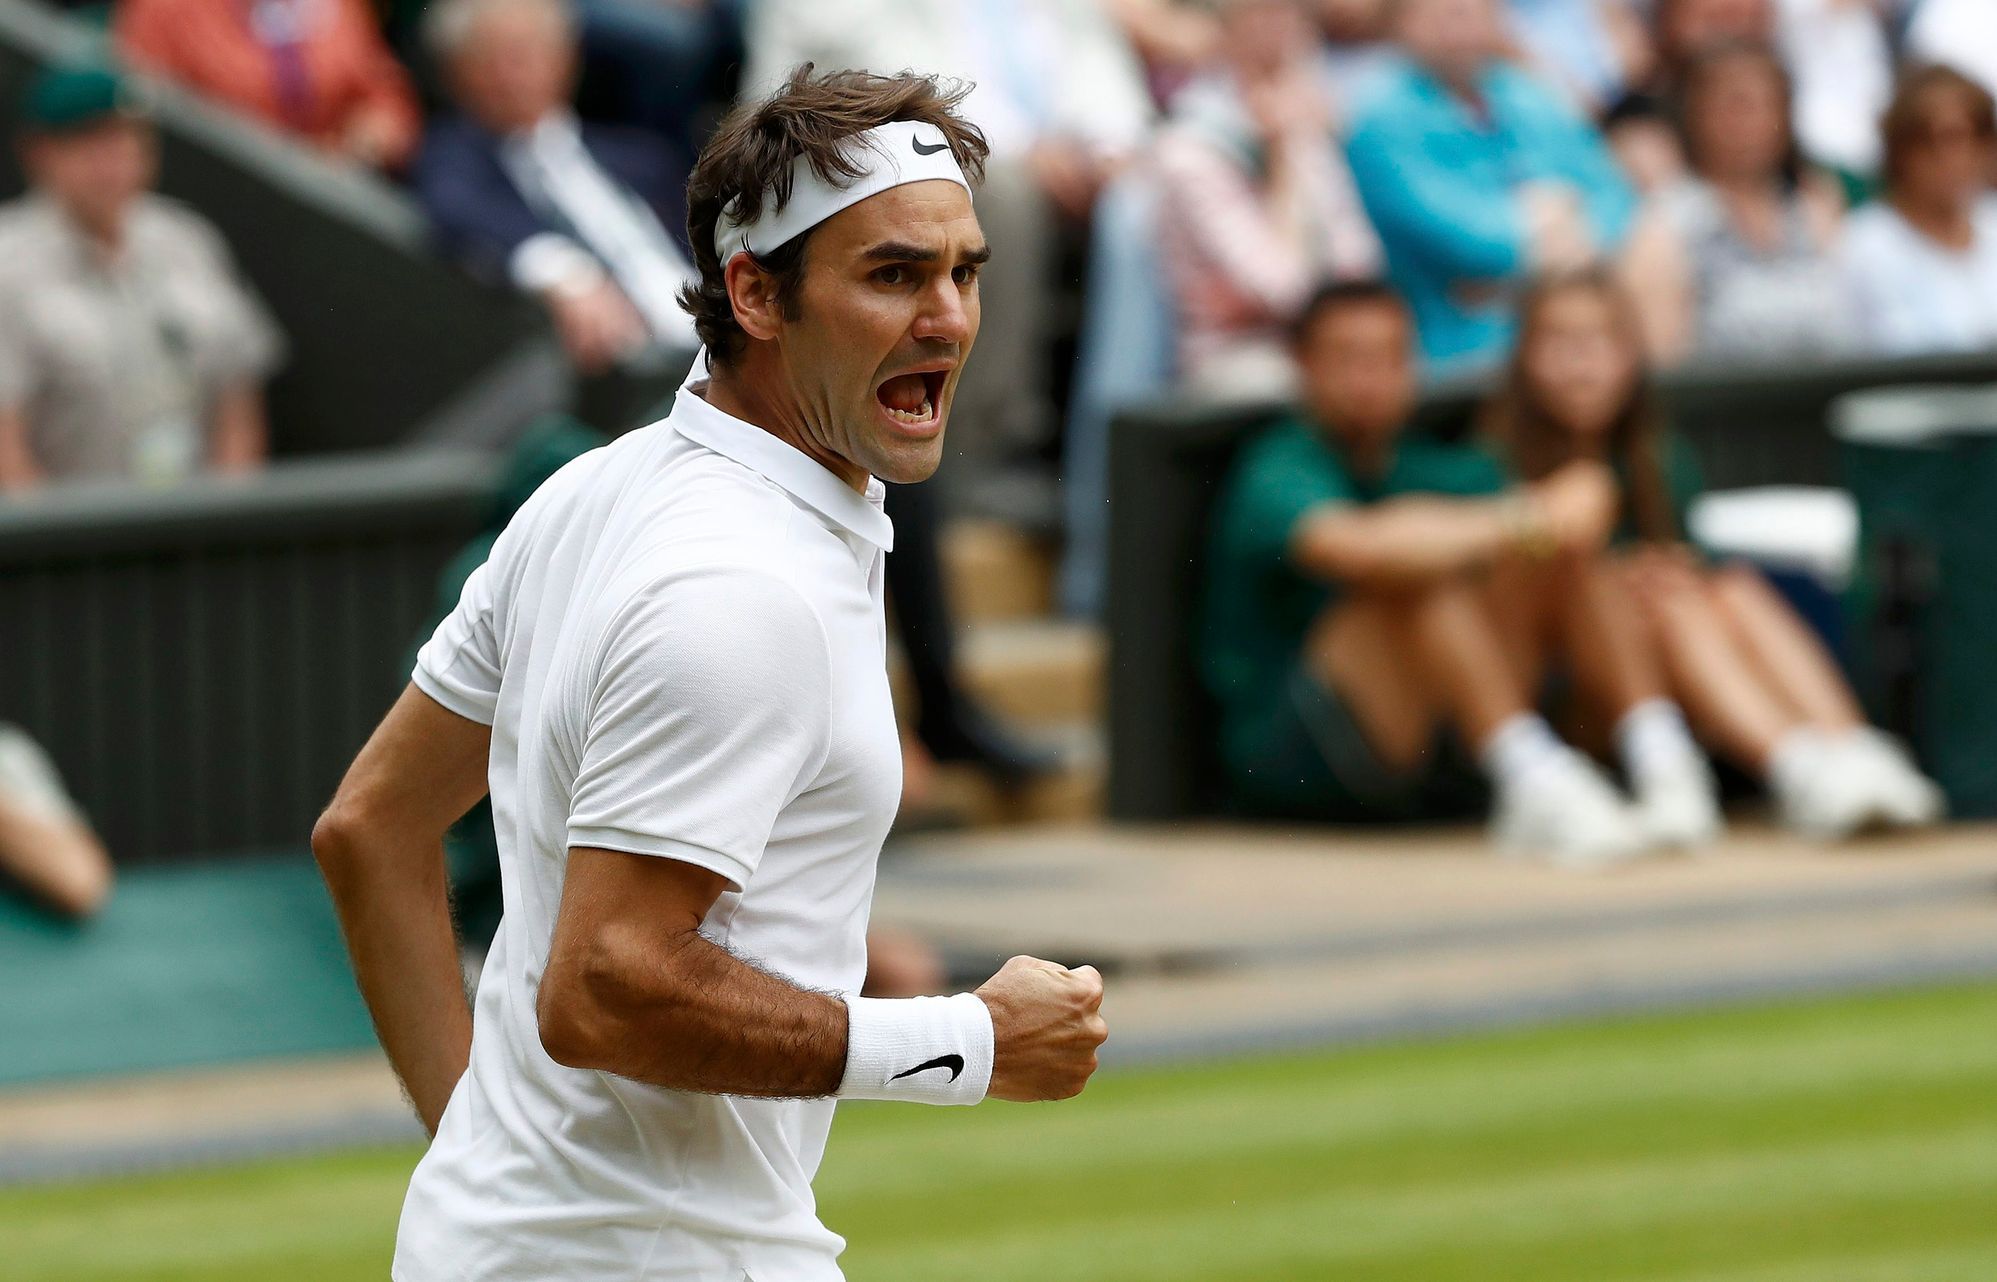 Roger Federer v semifinále Wimbledonu 2016